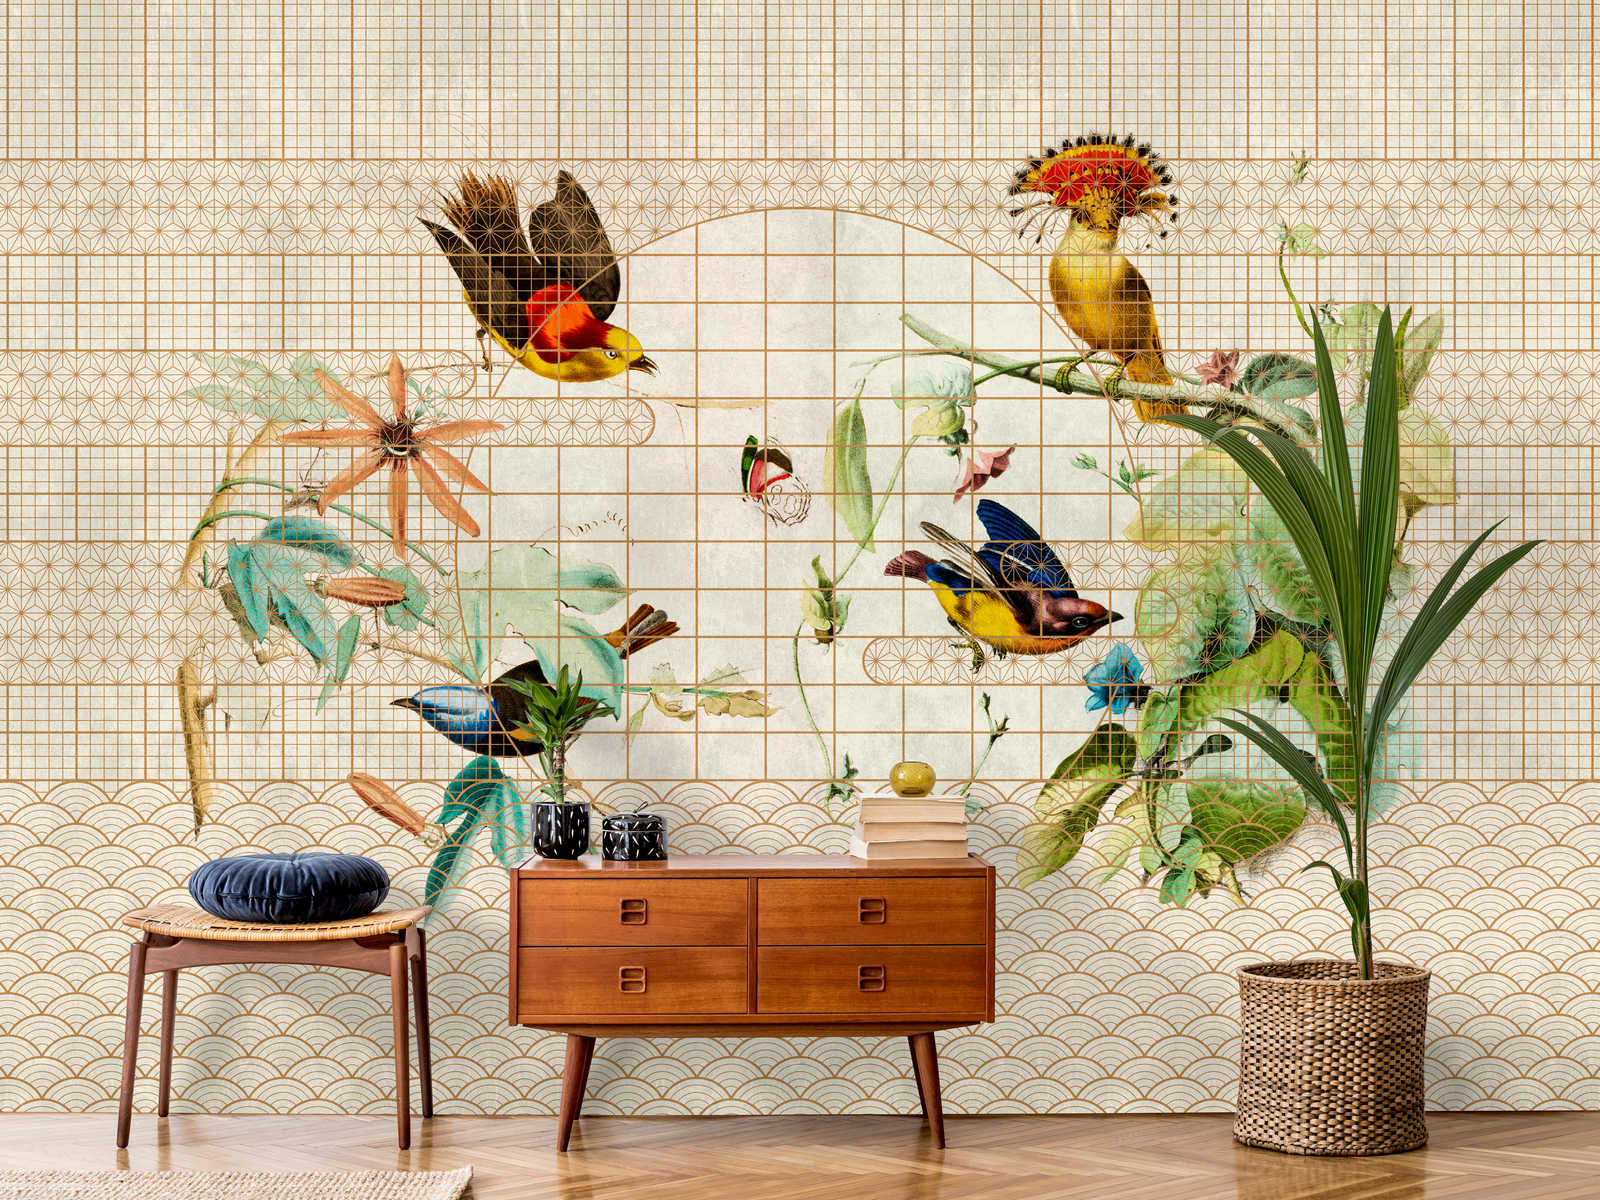             Aviary 1 - Photo wallpaper birds & butterflies in golden aviary
        